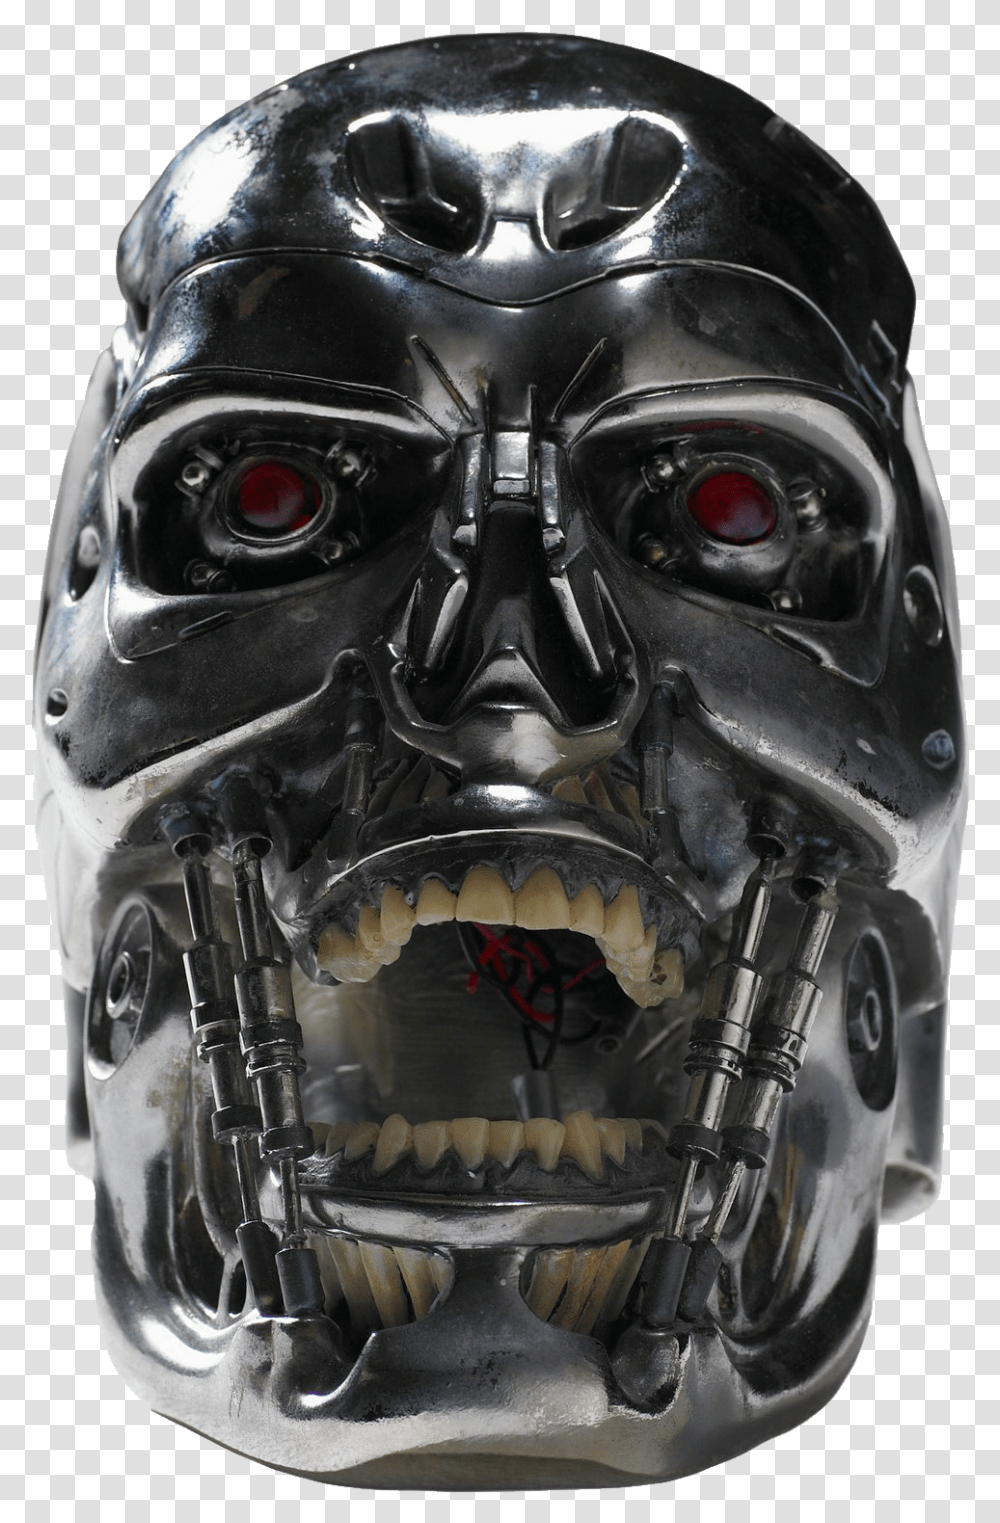 Download Terminator Skull Image For Free Terminator Skull, Helmet, Clothing, Apparel, Robot Transparent Png